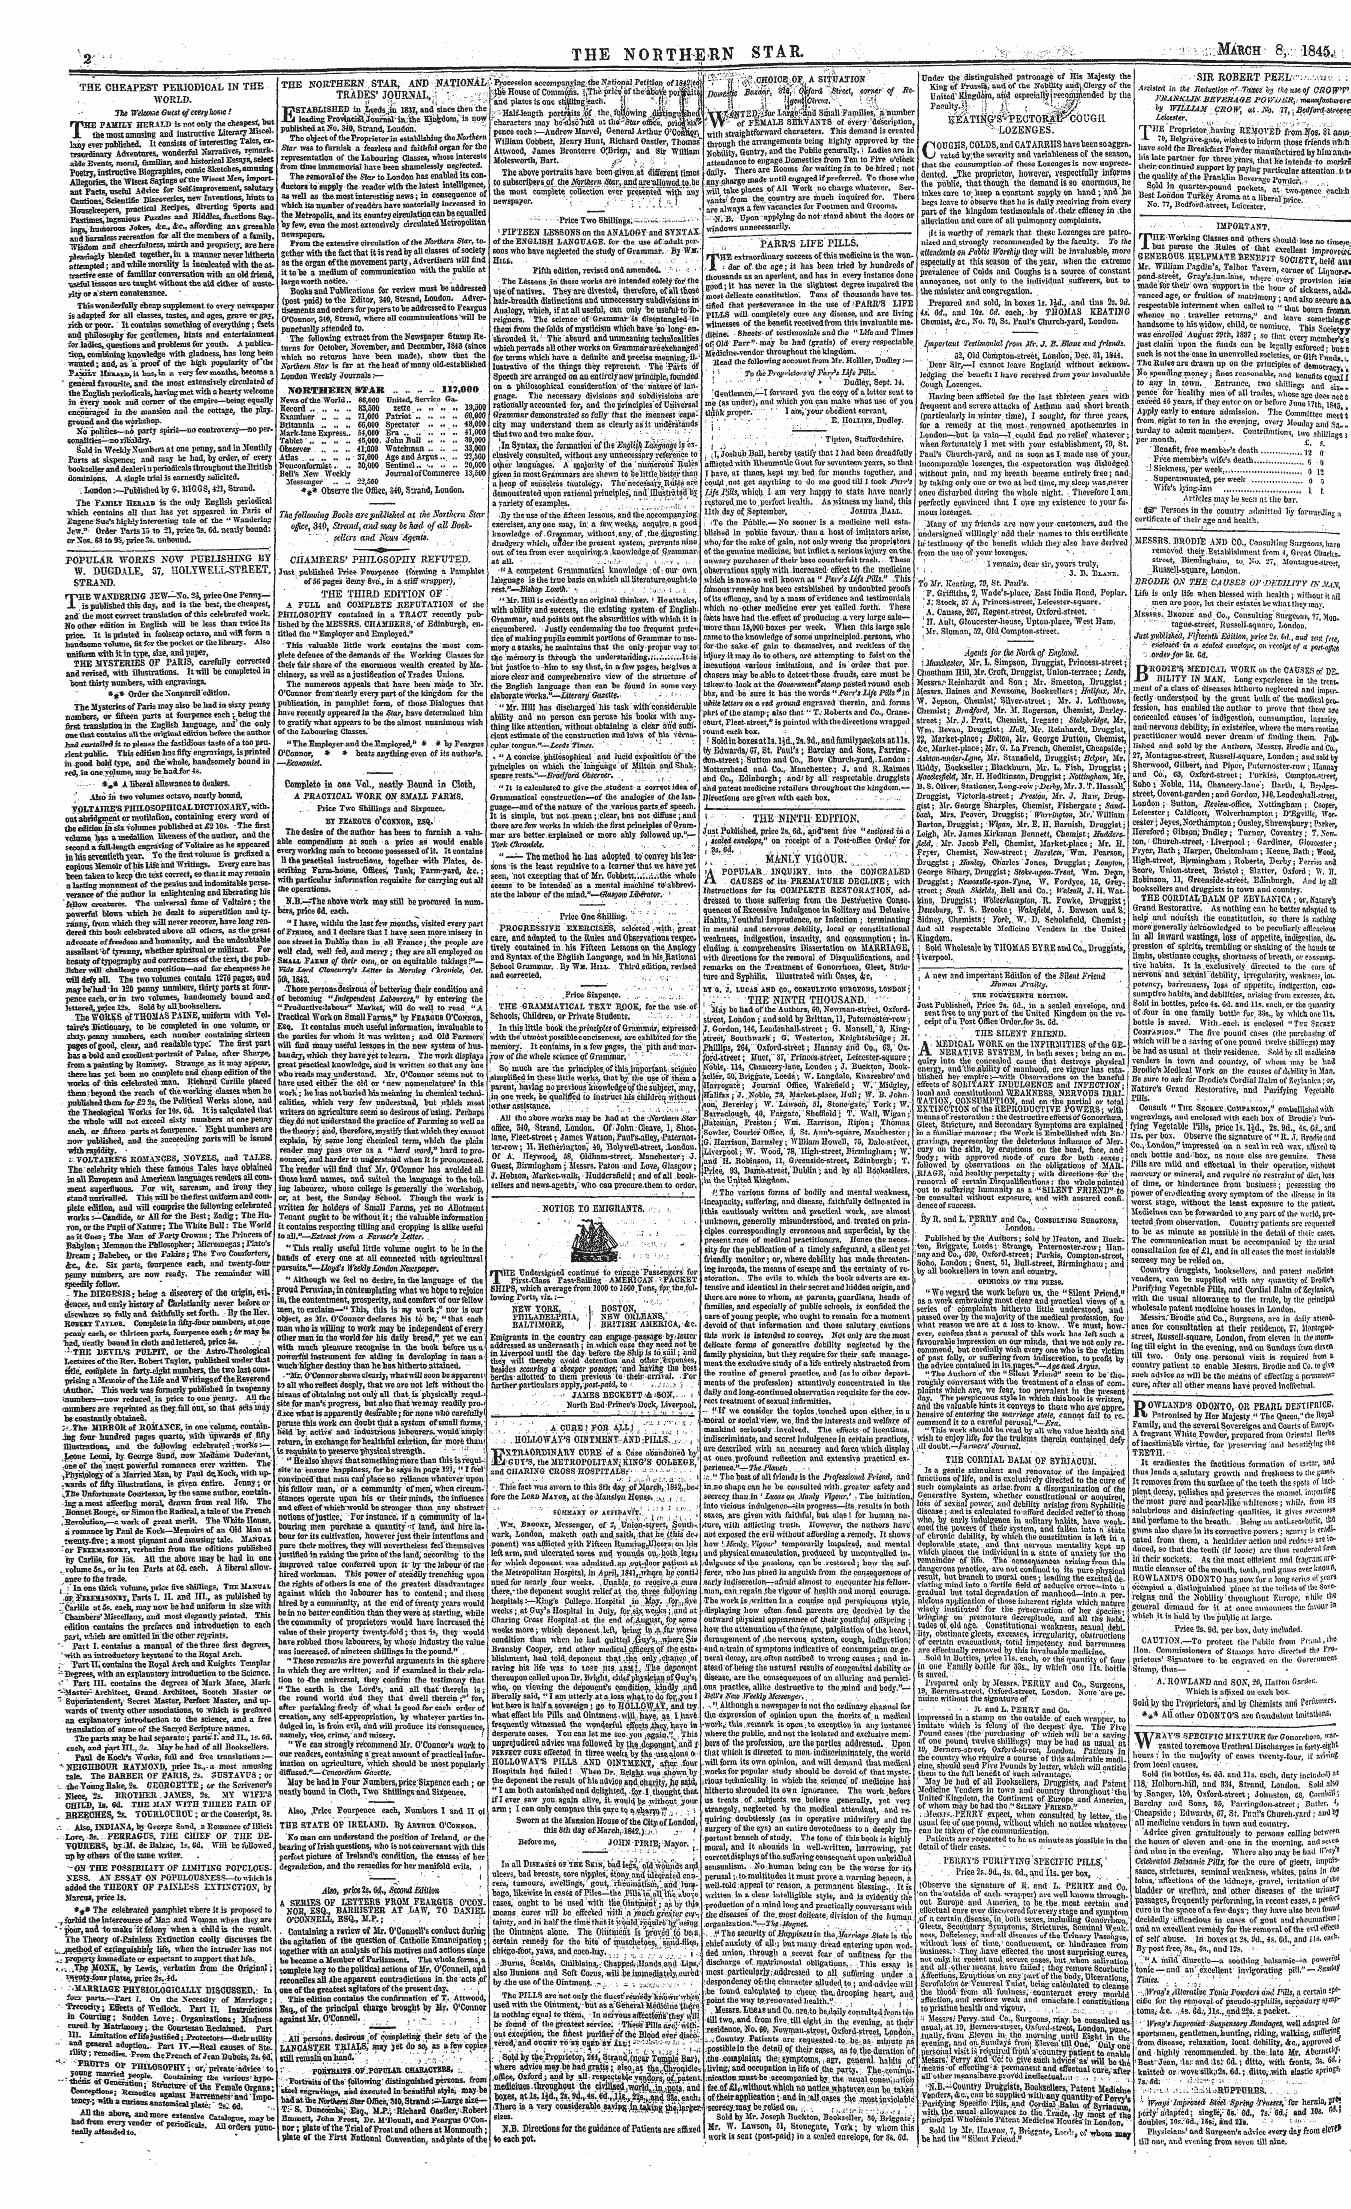 Northern Star (1837-1852): jS F Y, 3rd edition - Ad00216